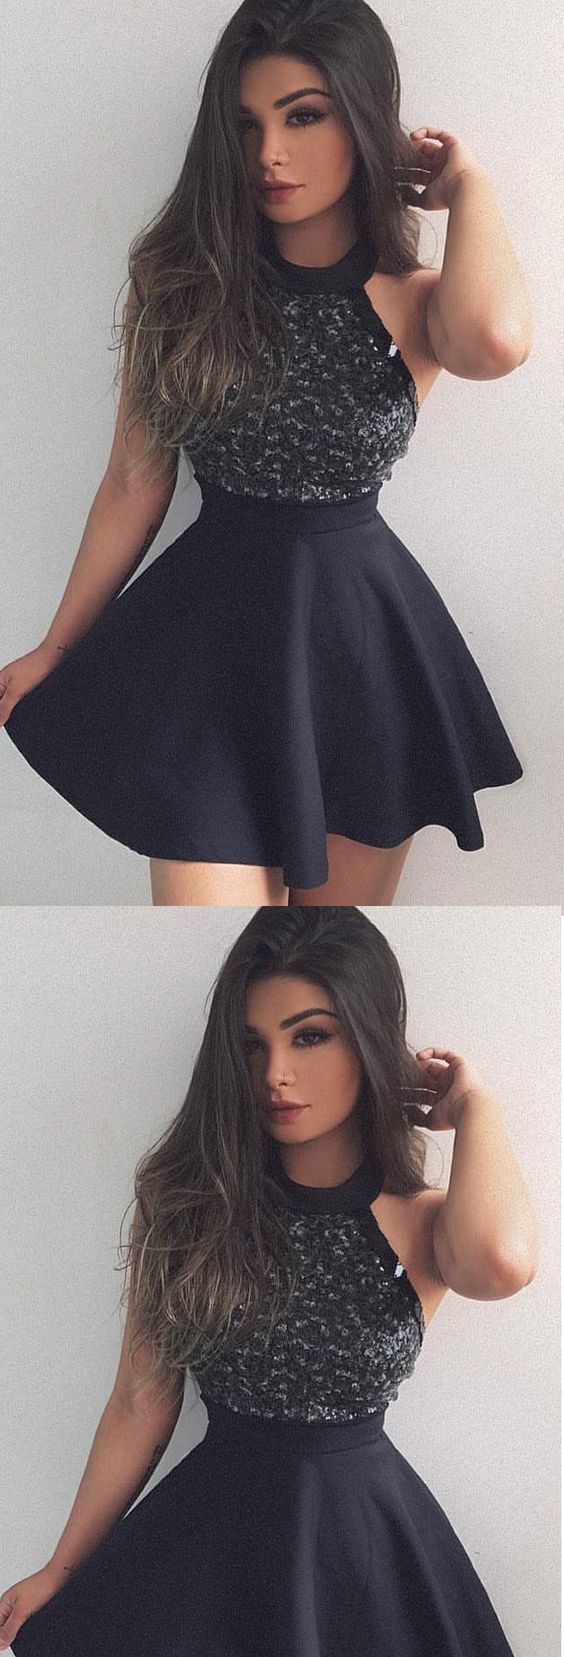 Black Homecoming Dress, Short Mini Dress with Beading, Fashion Graduation Dress cg366